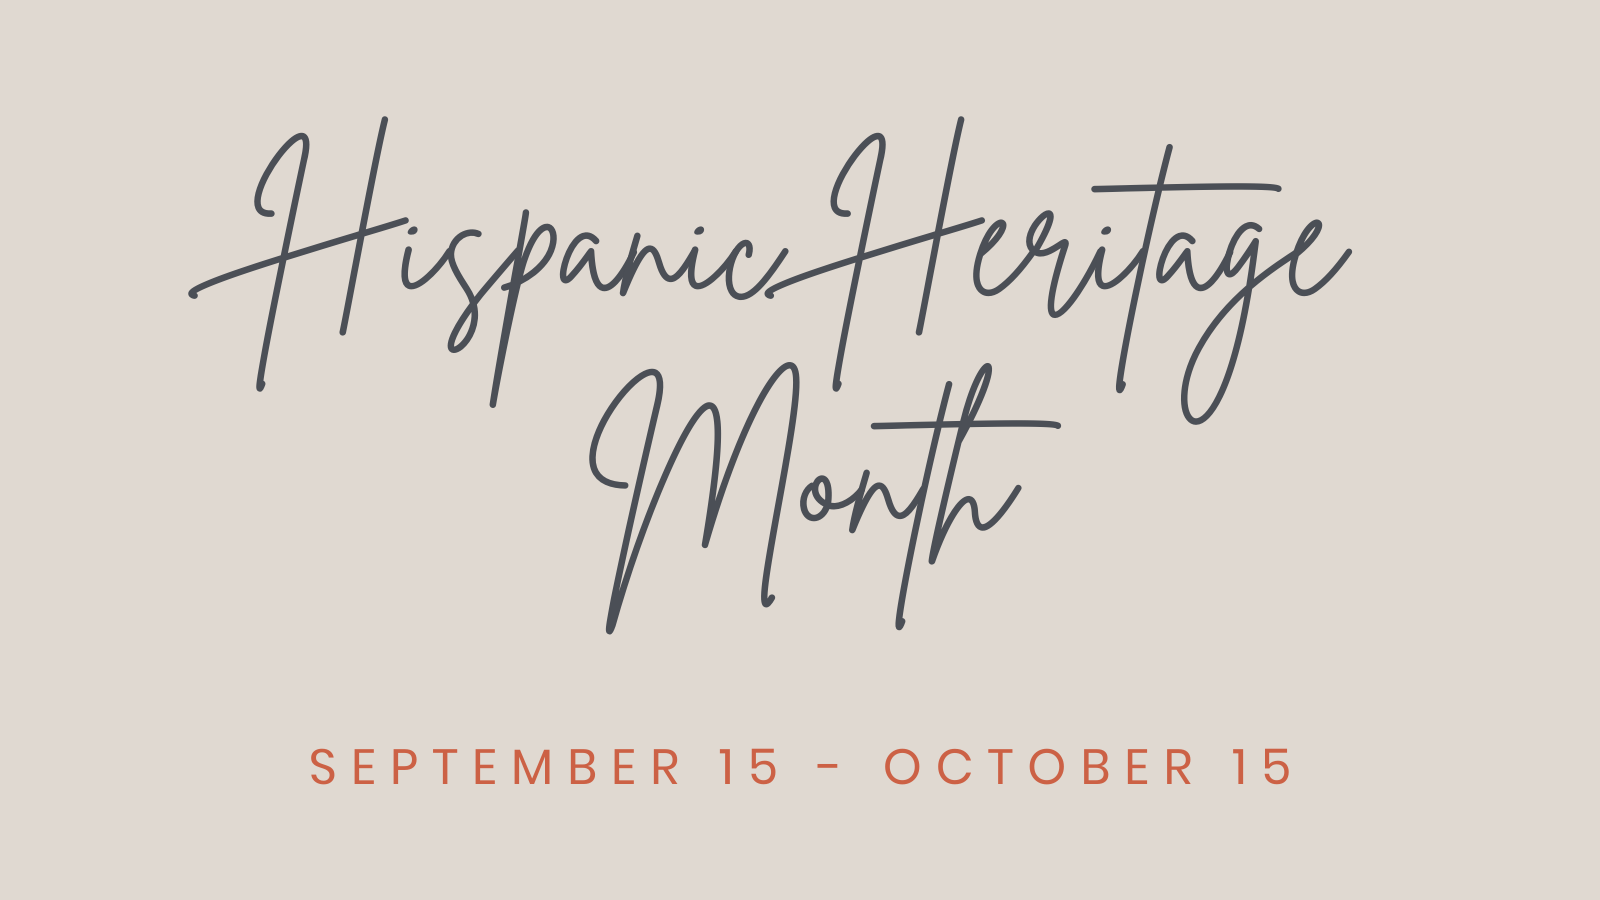 Text reading "Hispanic Heritage Month September 15 - October 15"